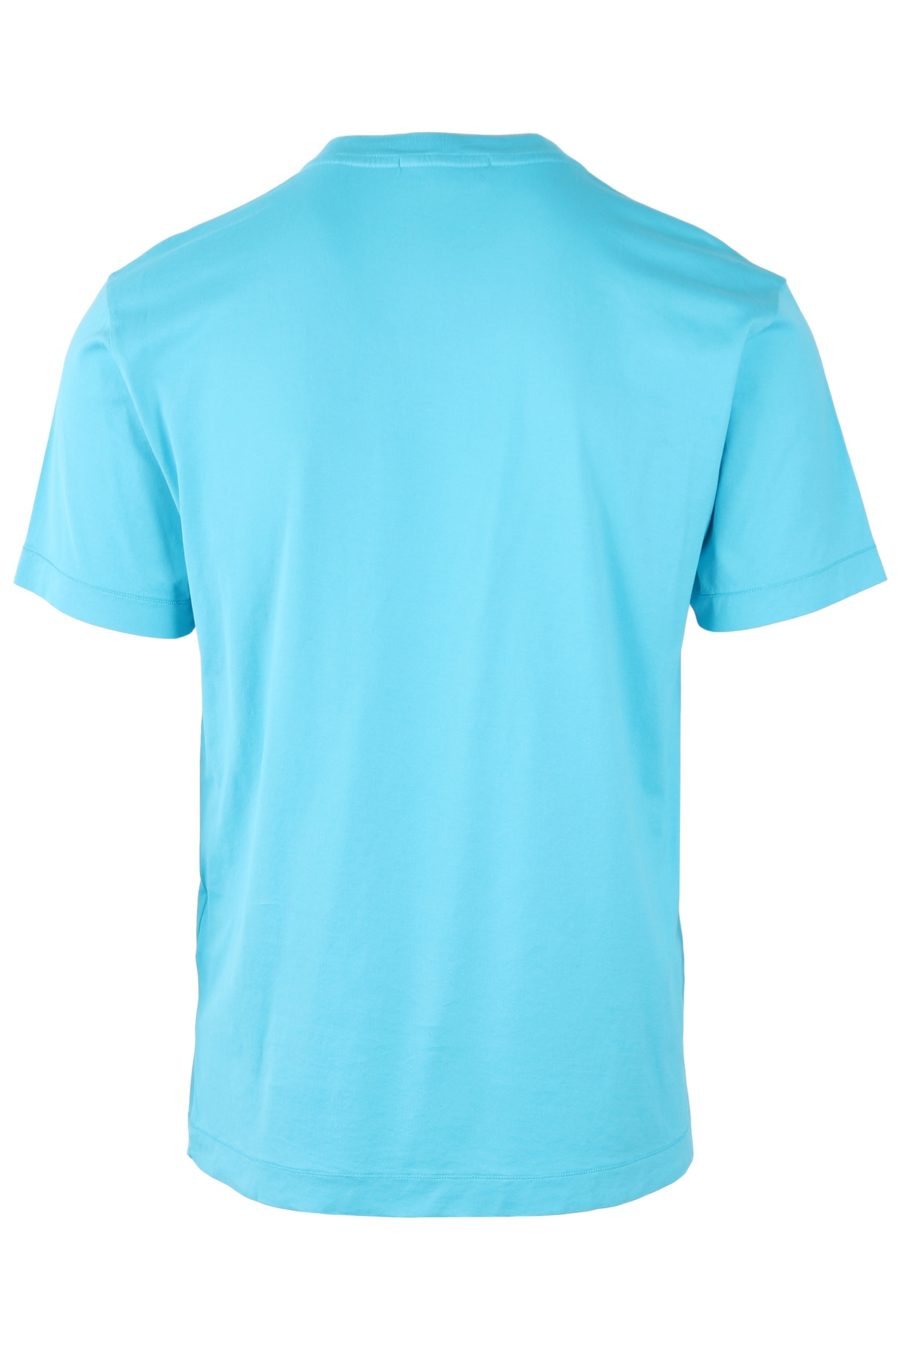 Camiseta Stone Island azul cielo con logo parche - 918cd223444fd36ffcc3f12a8f0df786a8bf6f6d